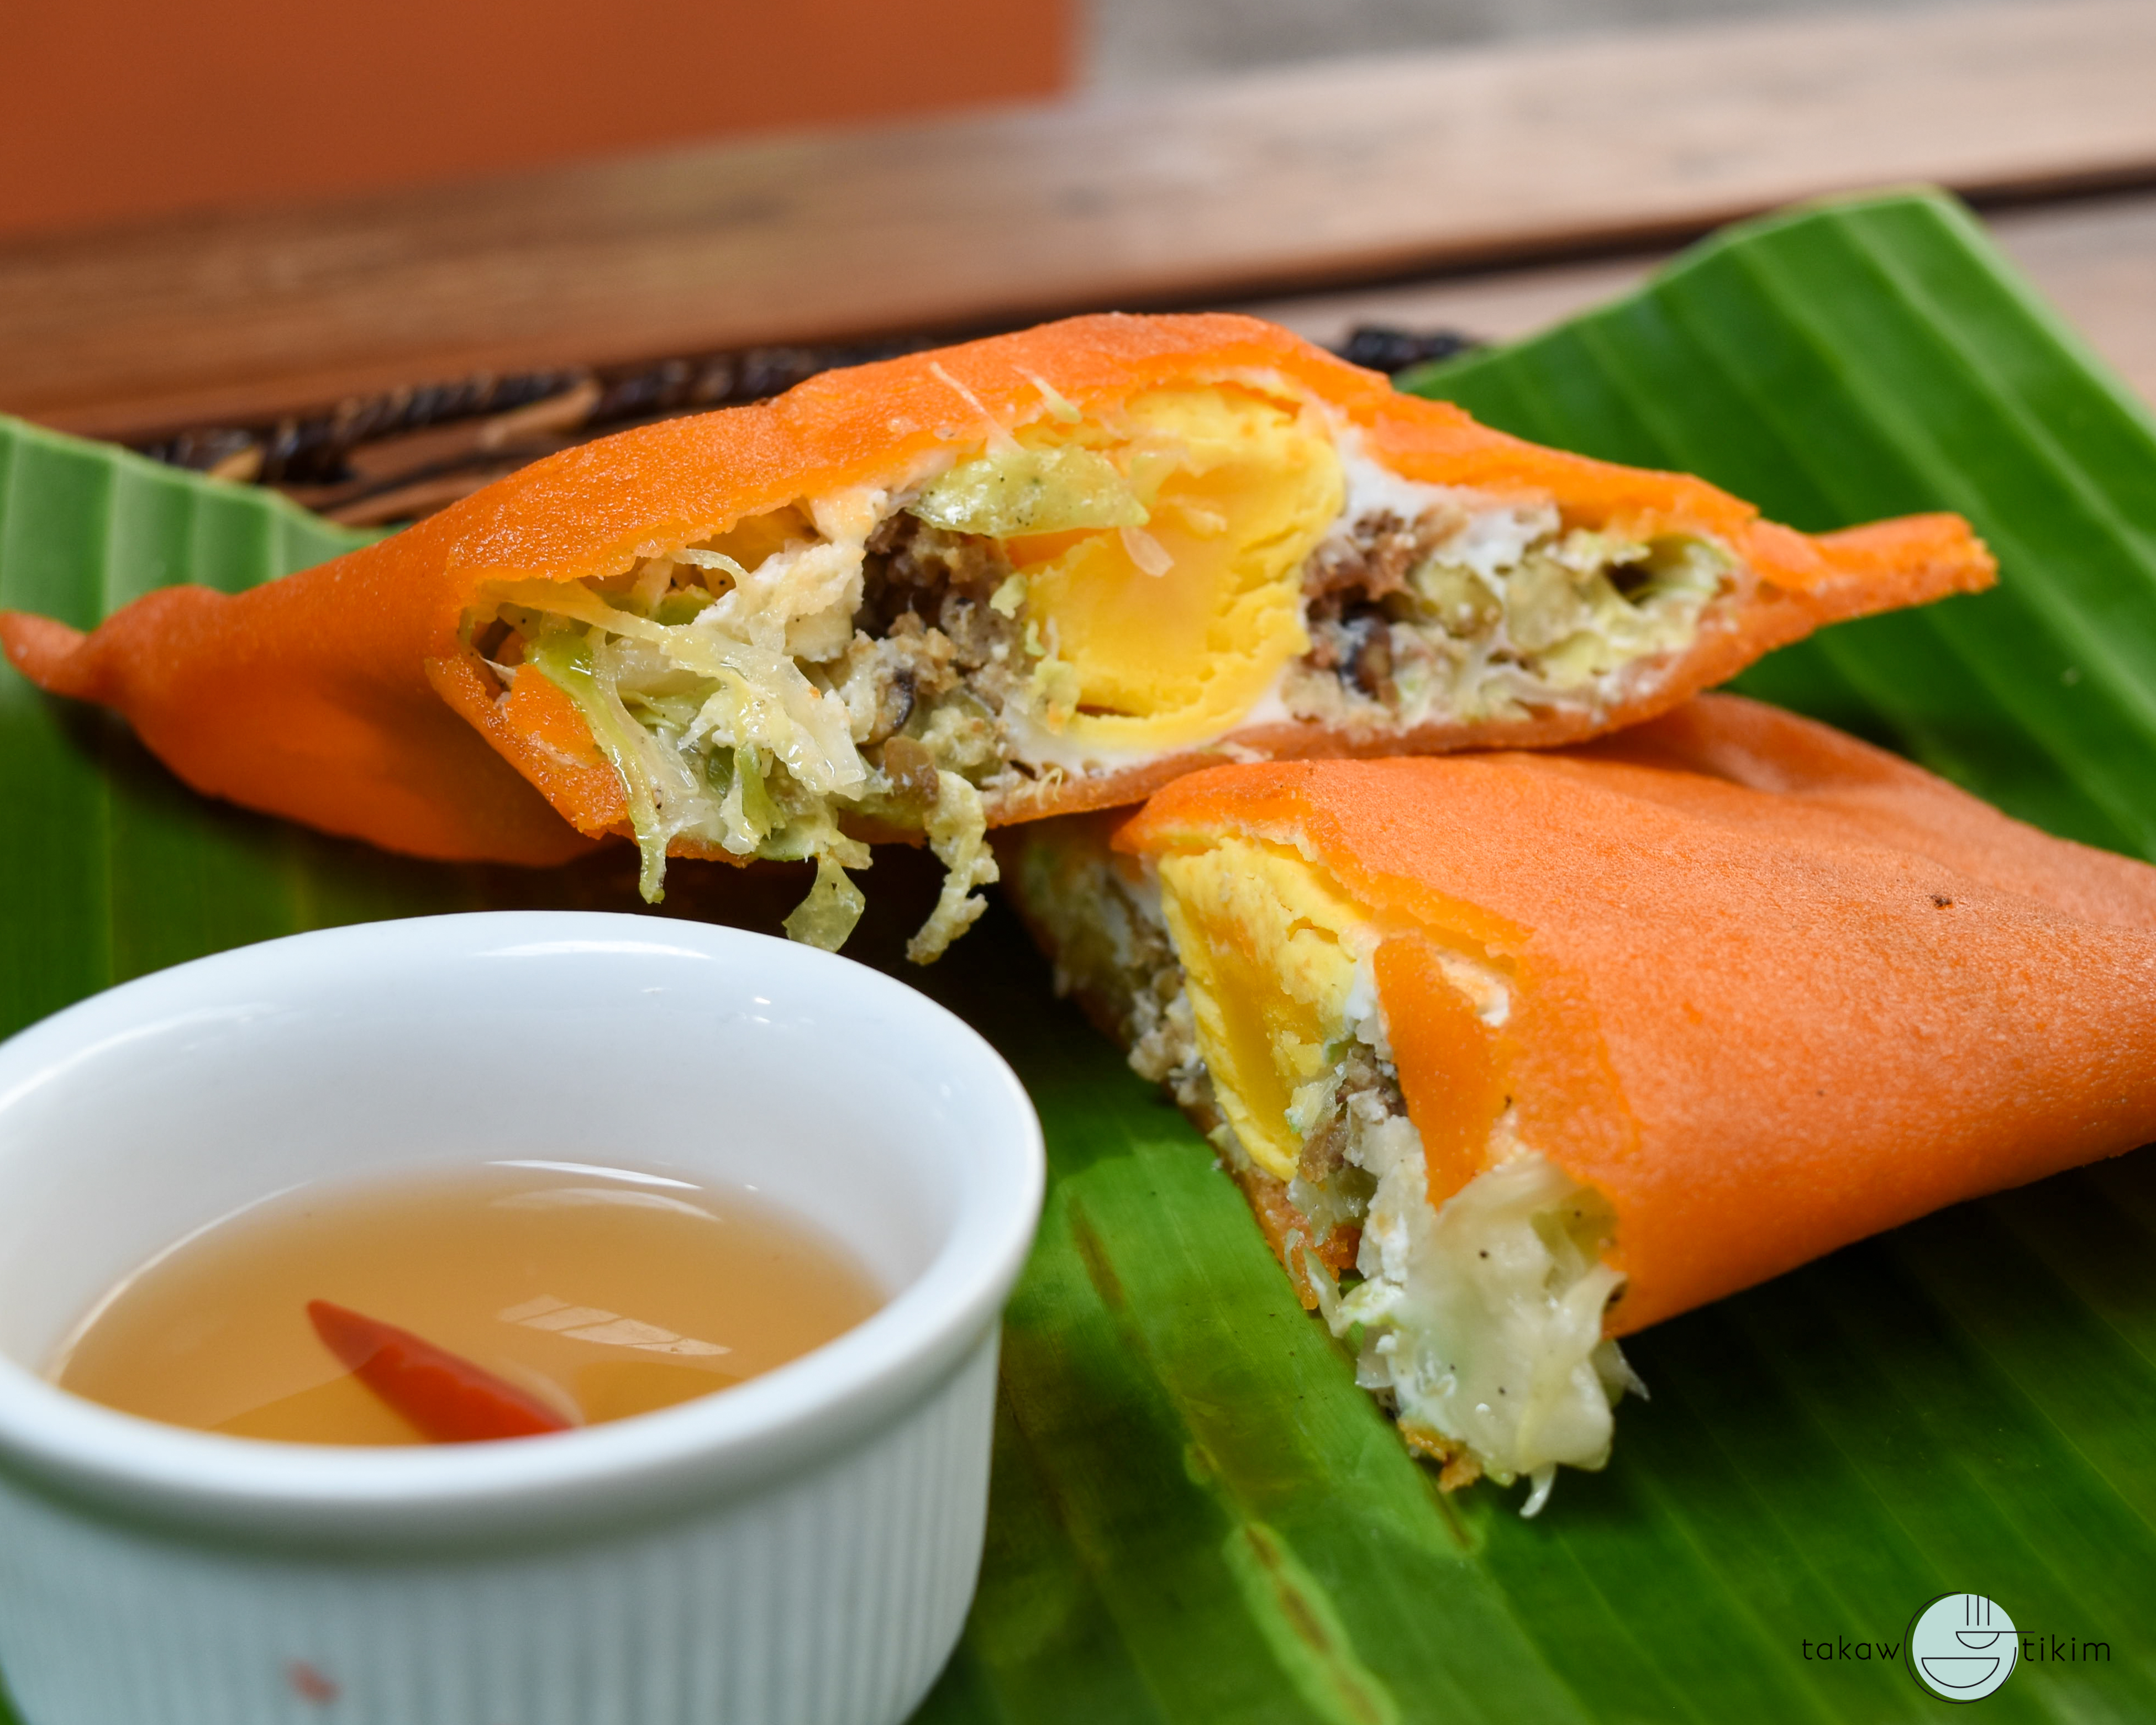 Orange you glad you can now make Ilocos Empanadas at home? Here's how